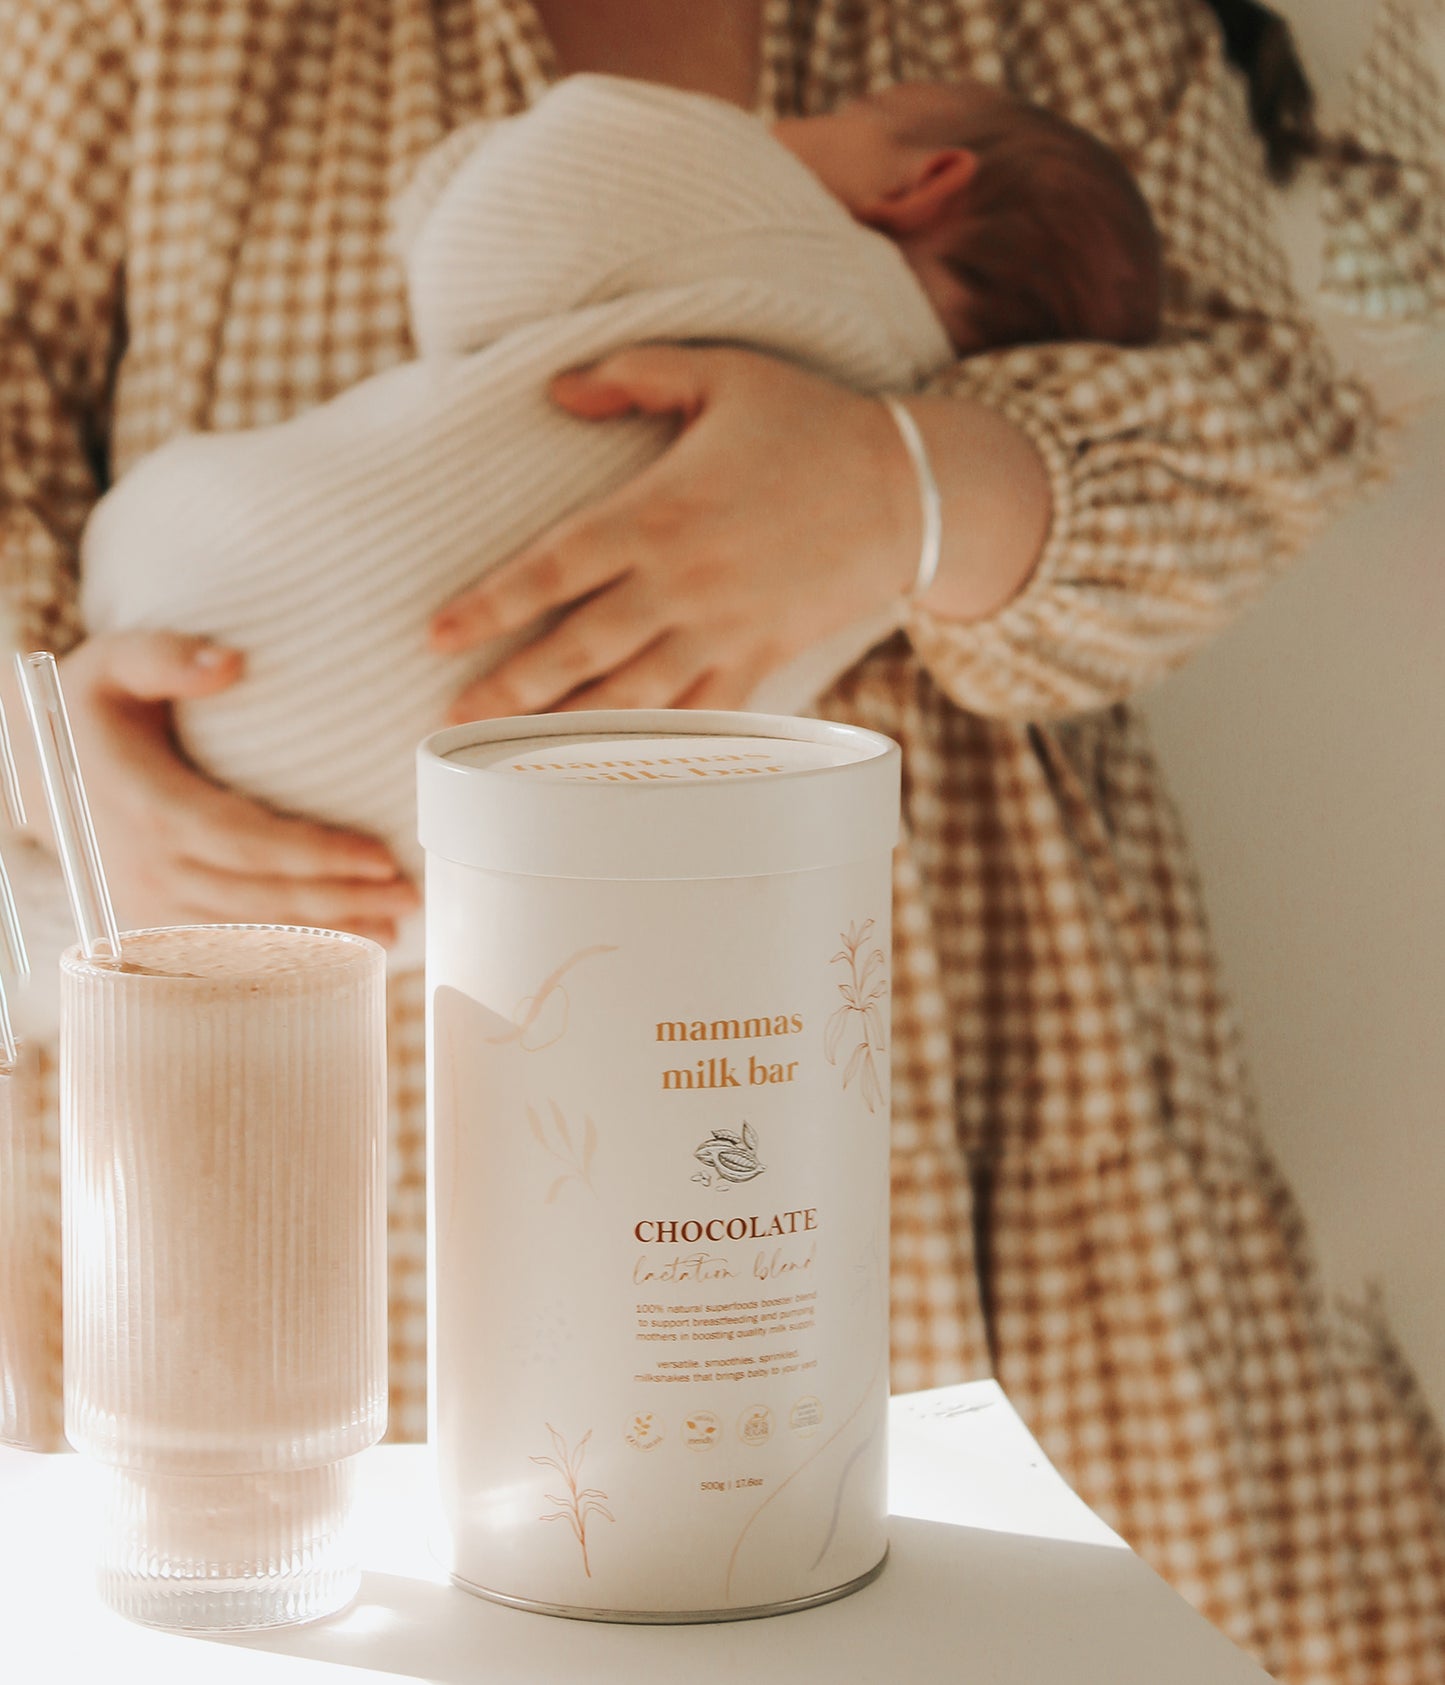 Flourish Maternity - Chocolate lactation blend mammas milk bar NZ